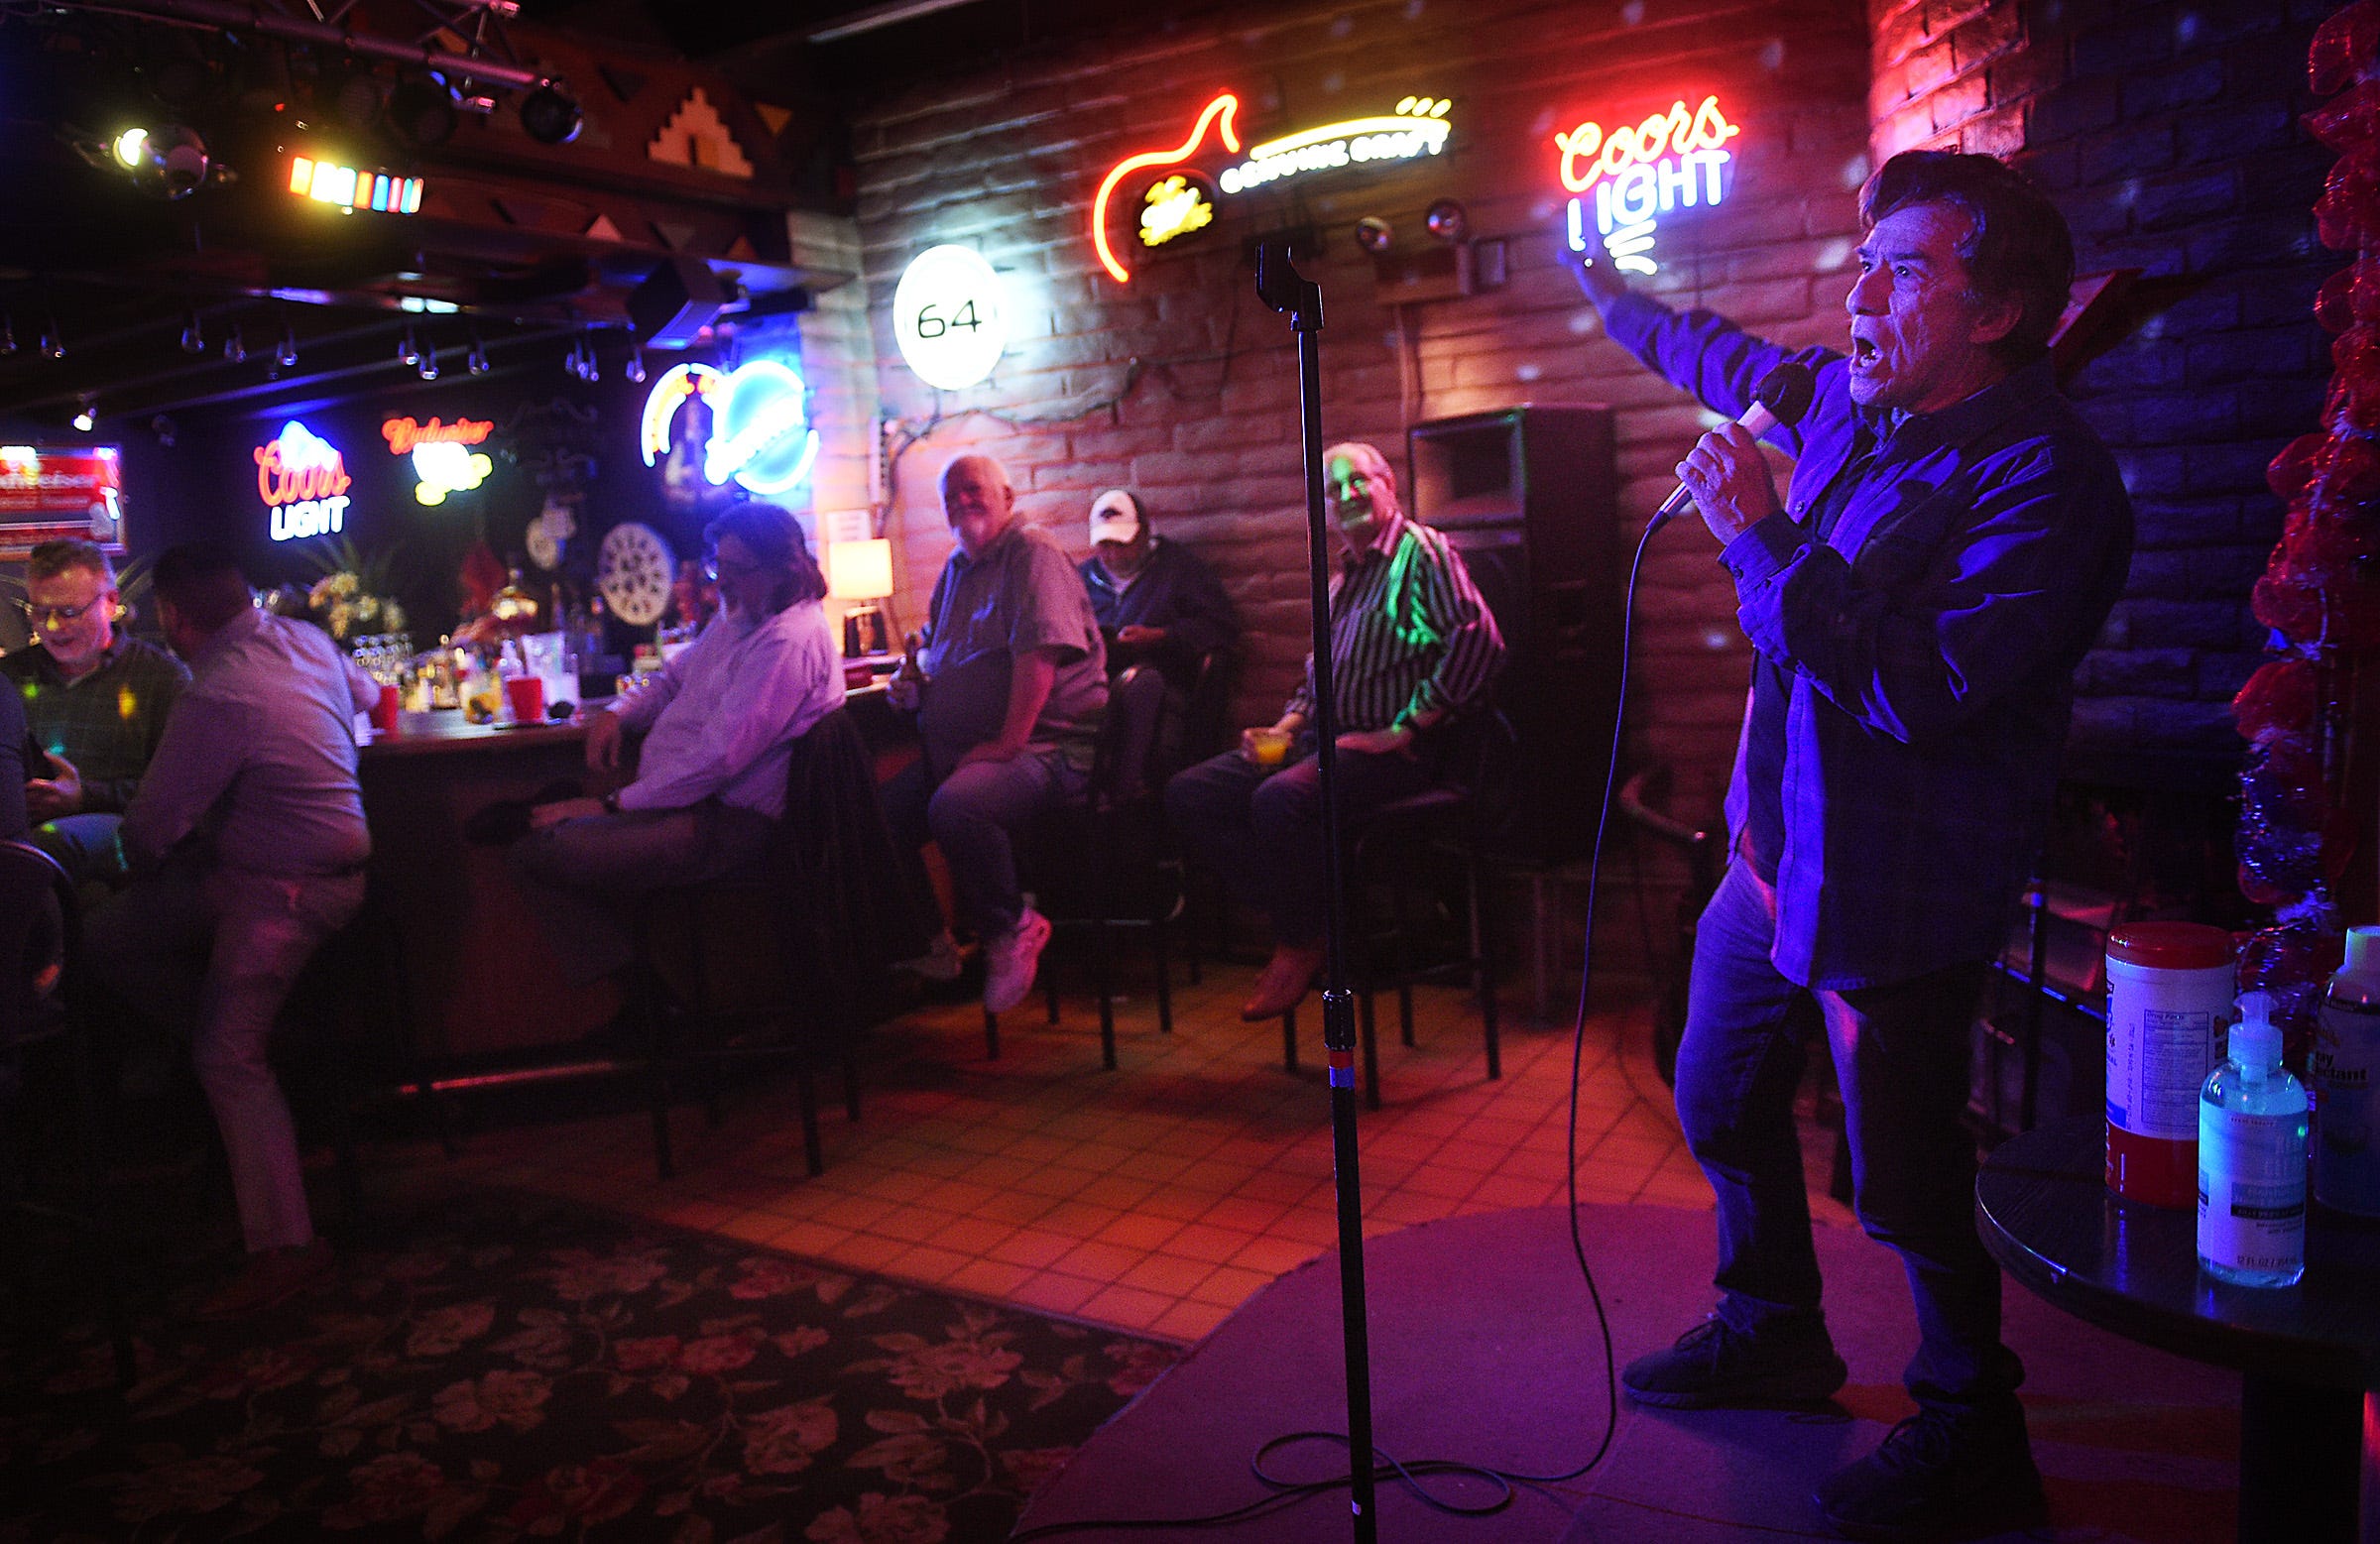 The Point NightClub, a karaoke bar in Reno, Nevada, to close